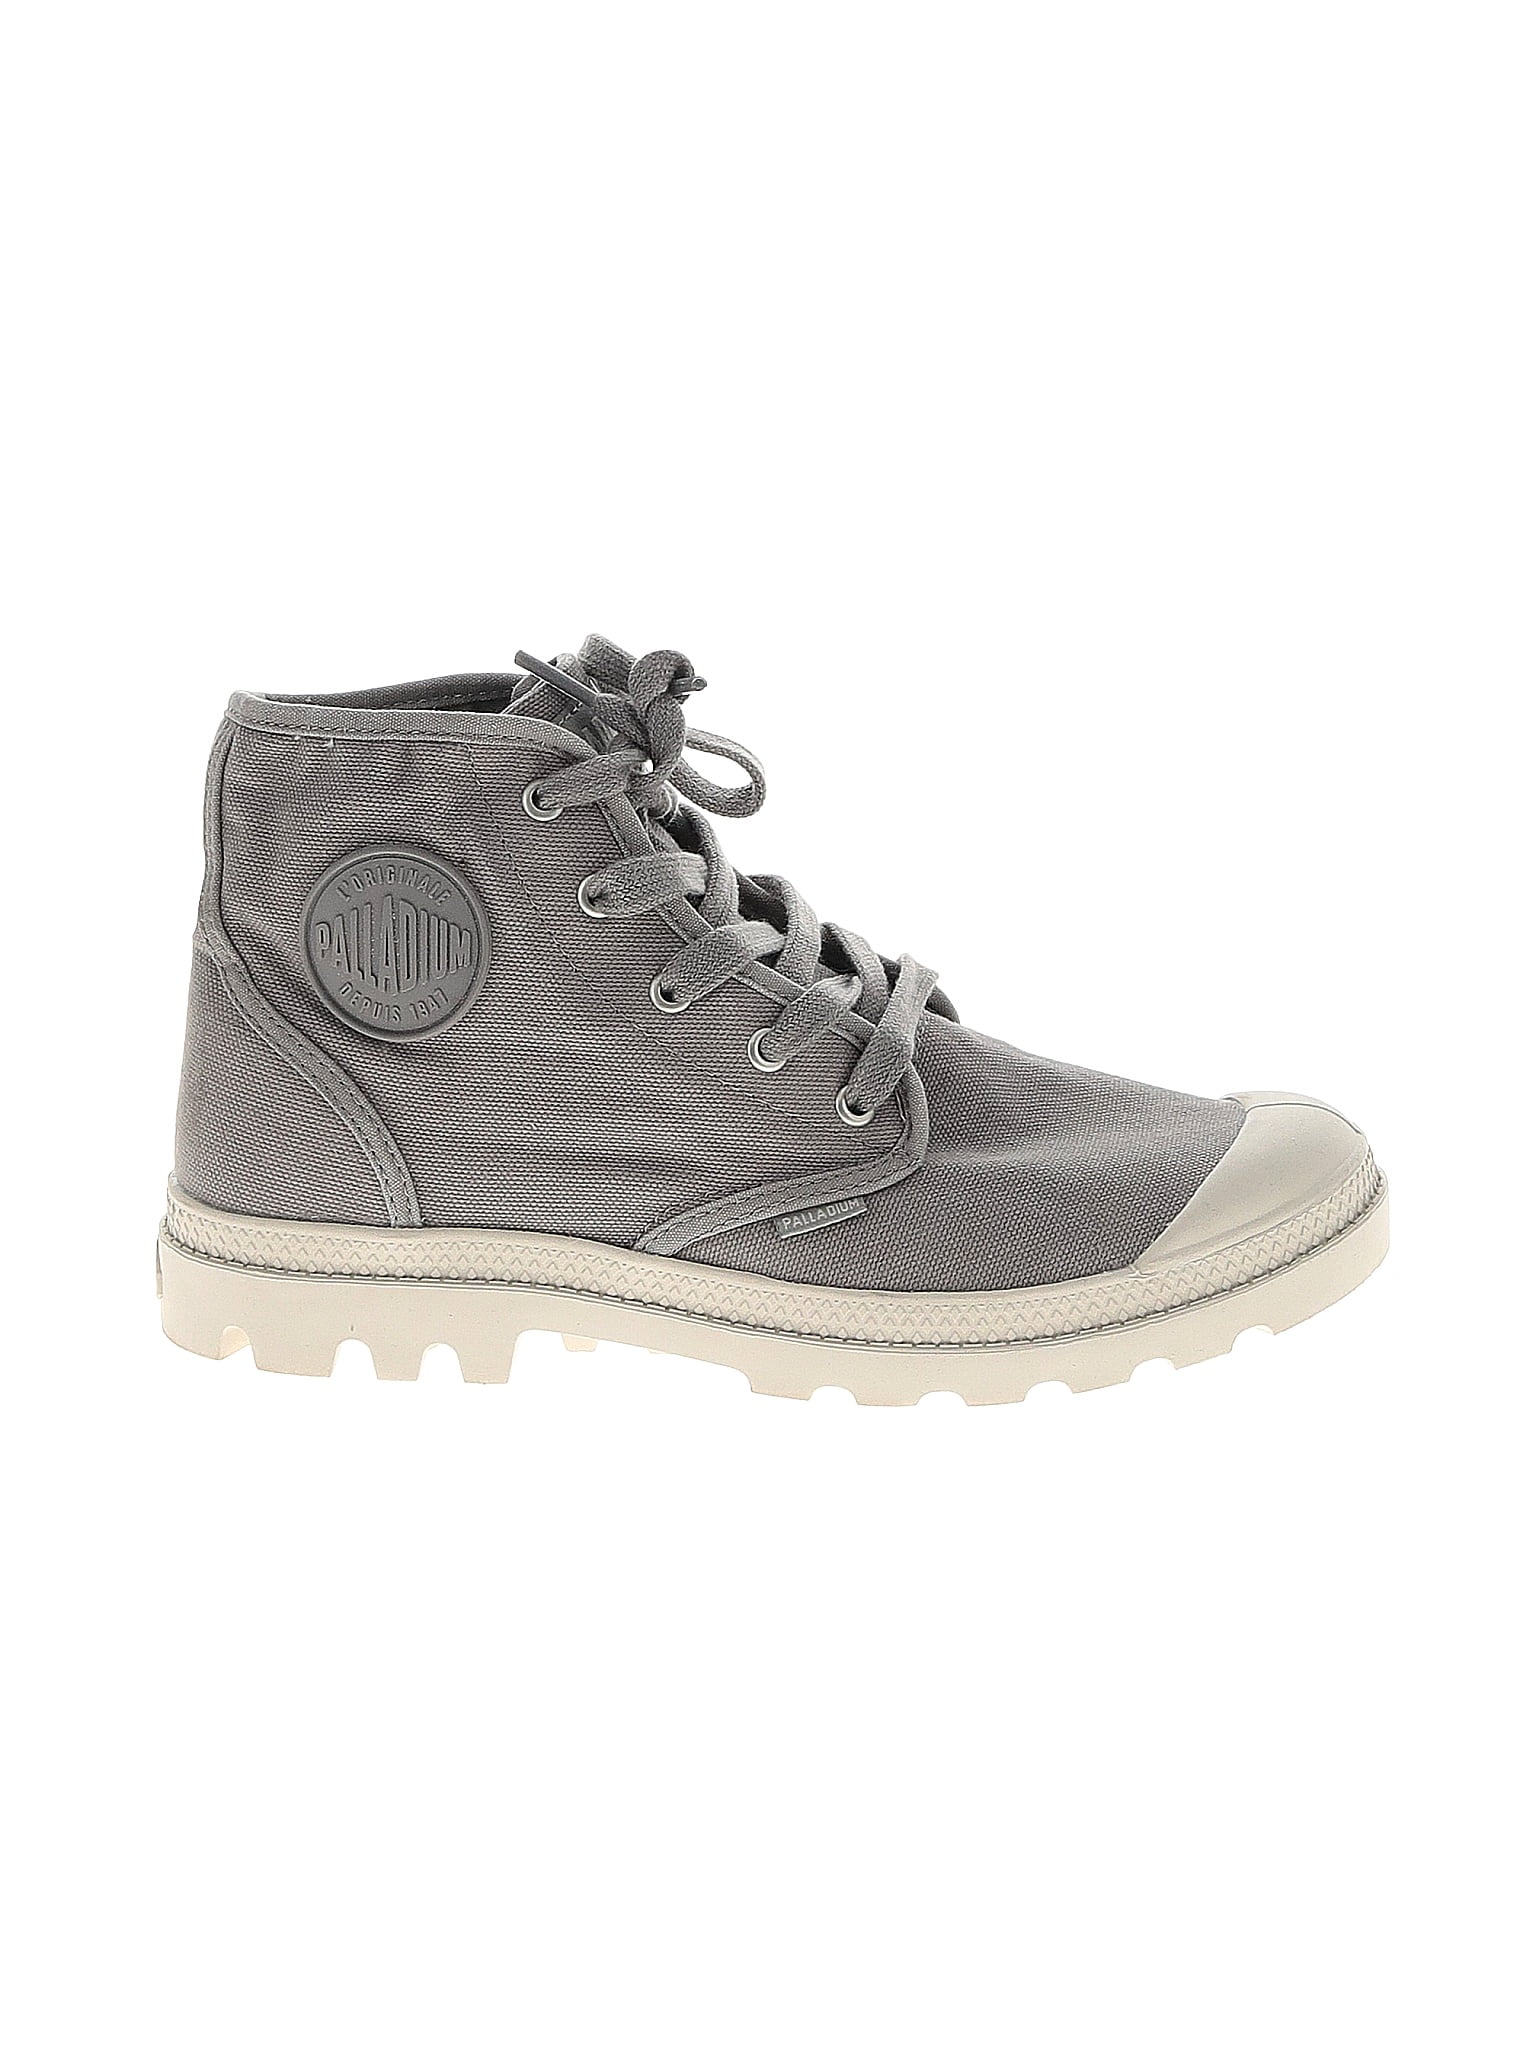 Palladium Solid Gray Sneakers Size 9 - 59% off | thredUP